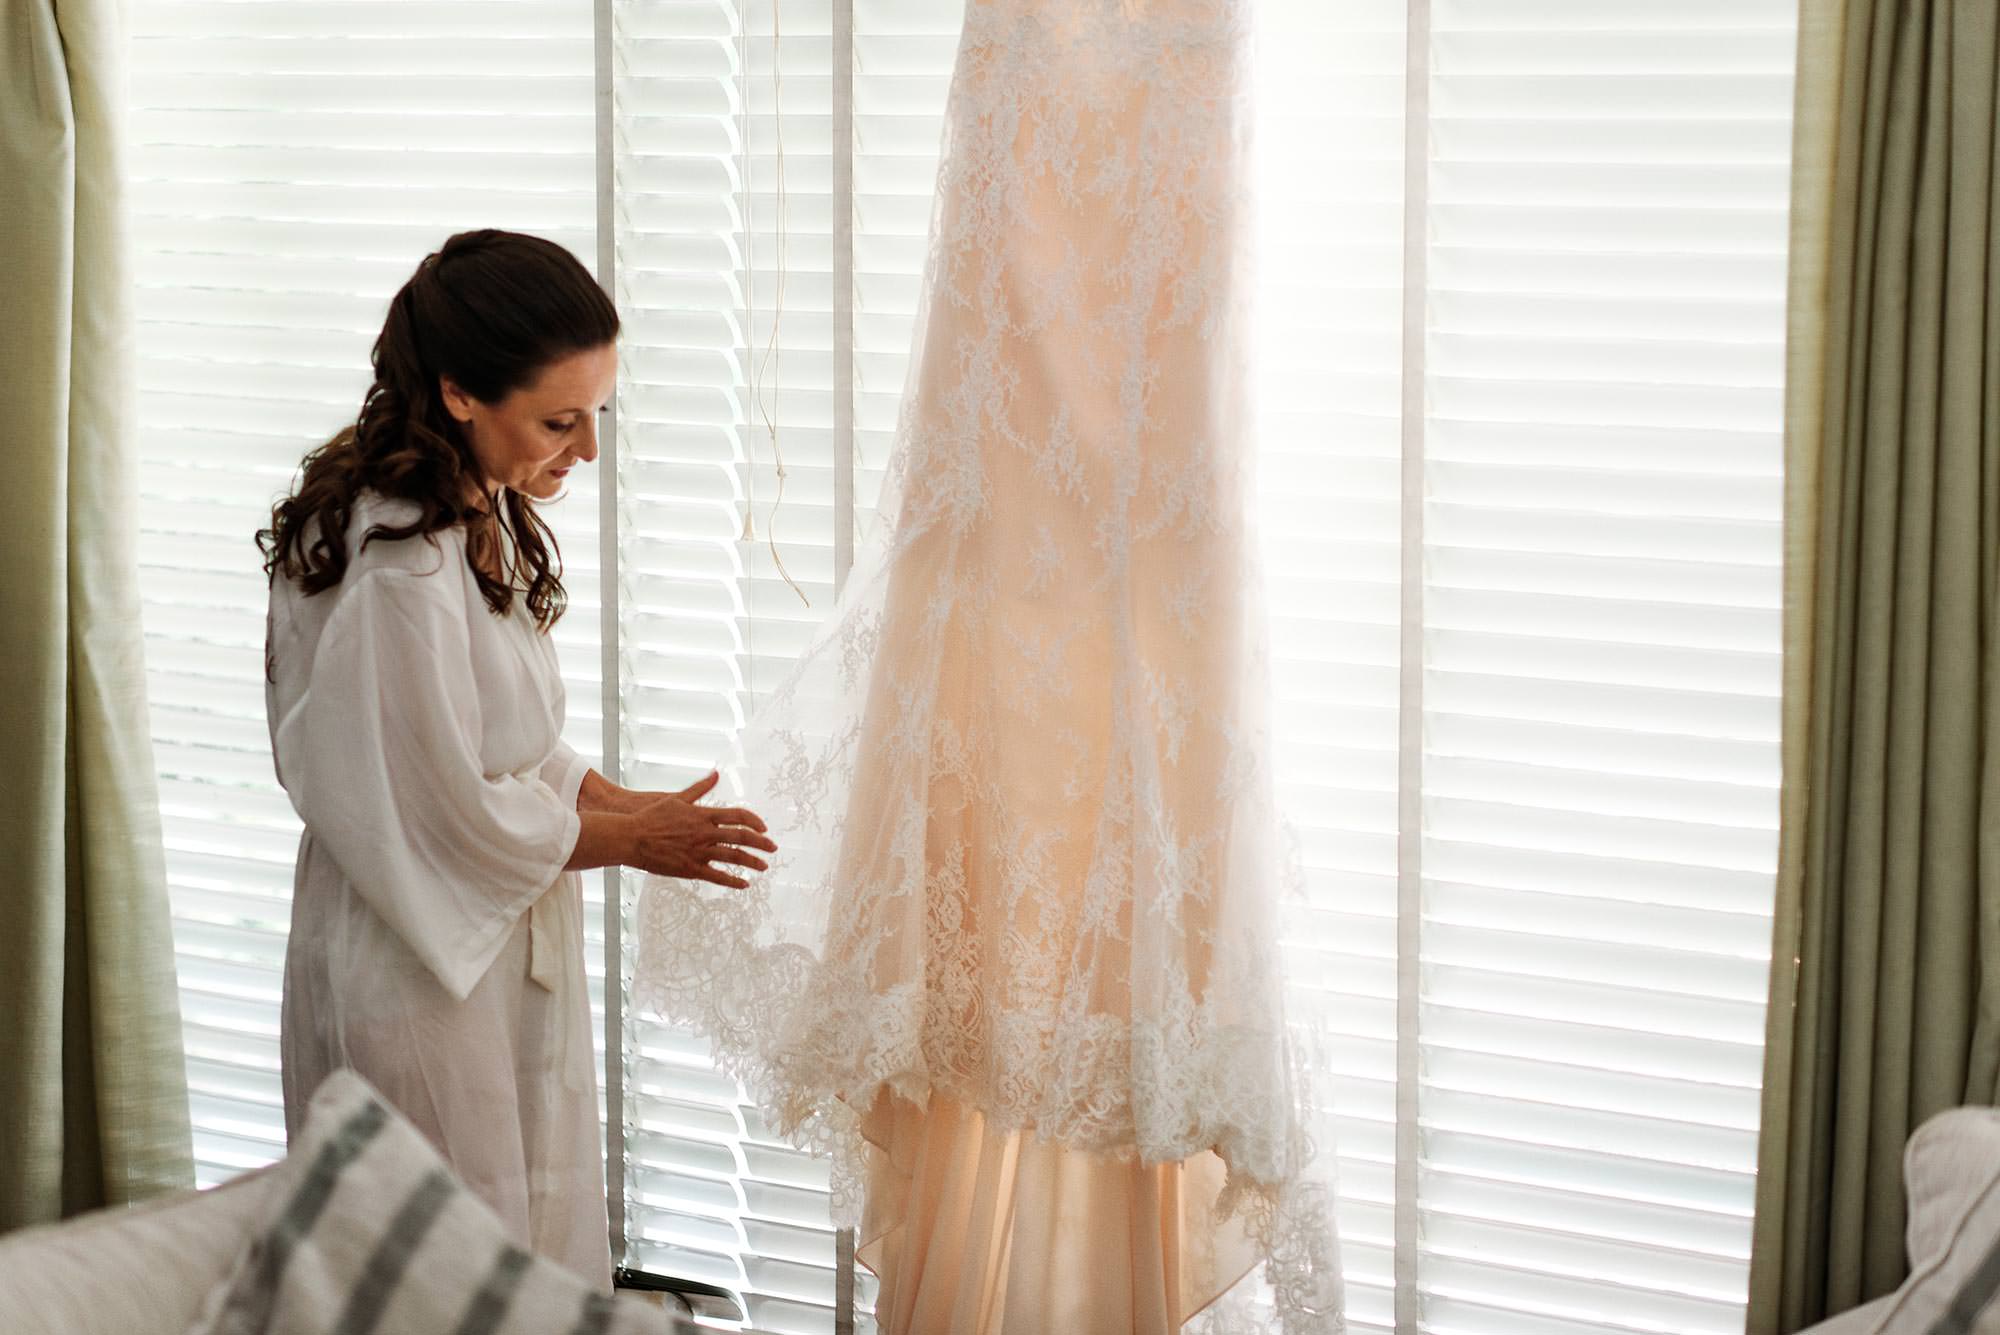 admiring her wedding dress